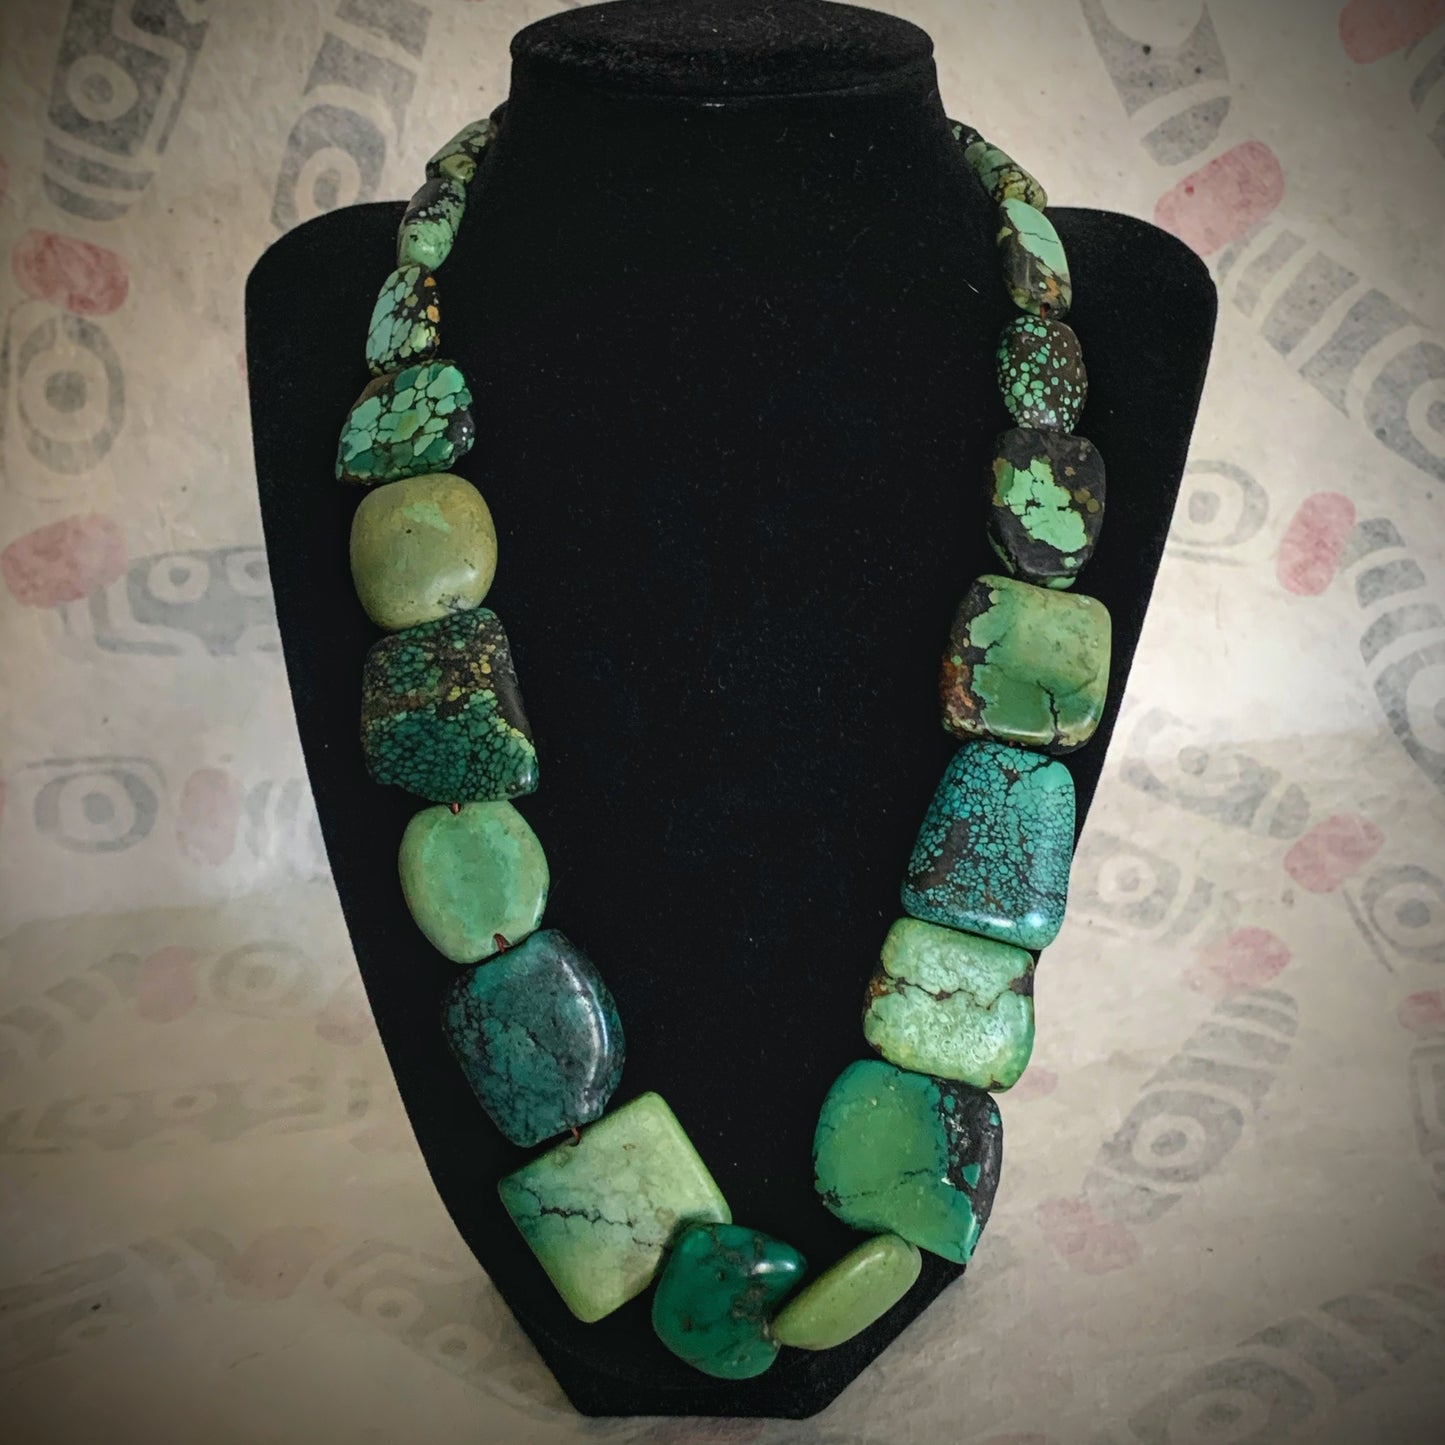 Antique Tibetan turquoise necklace